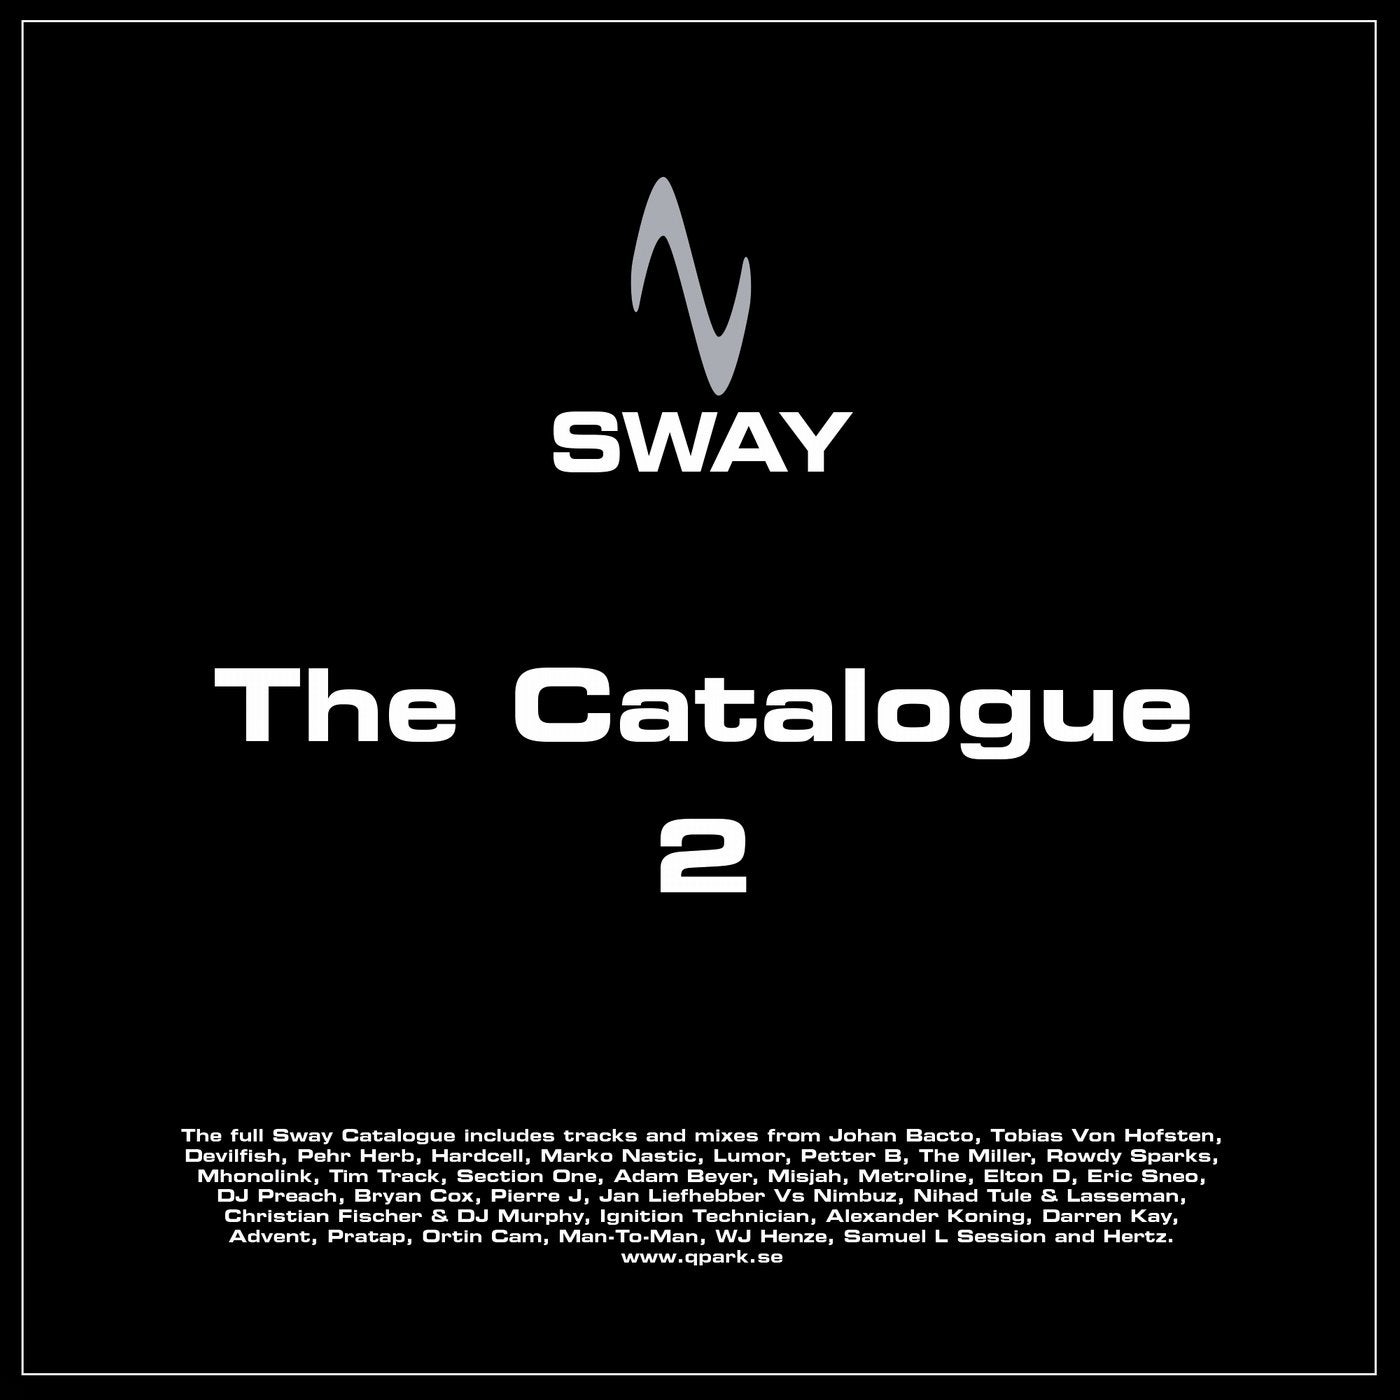 Sway - The Catalogue 2